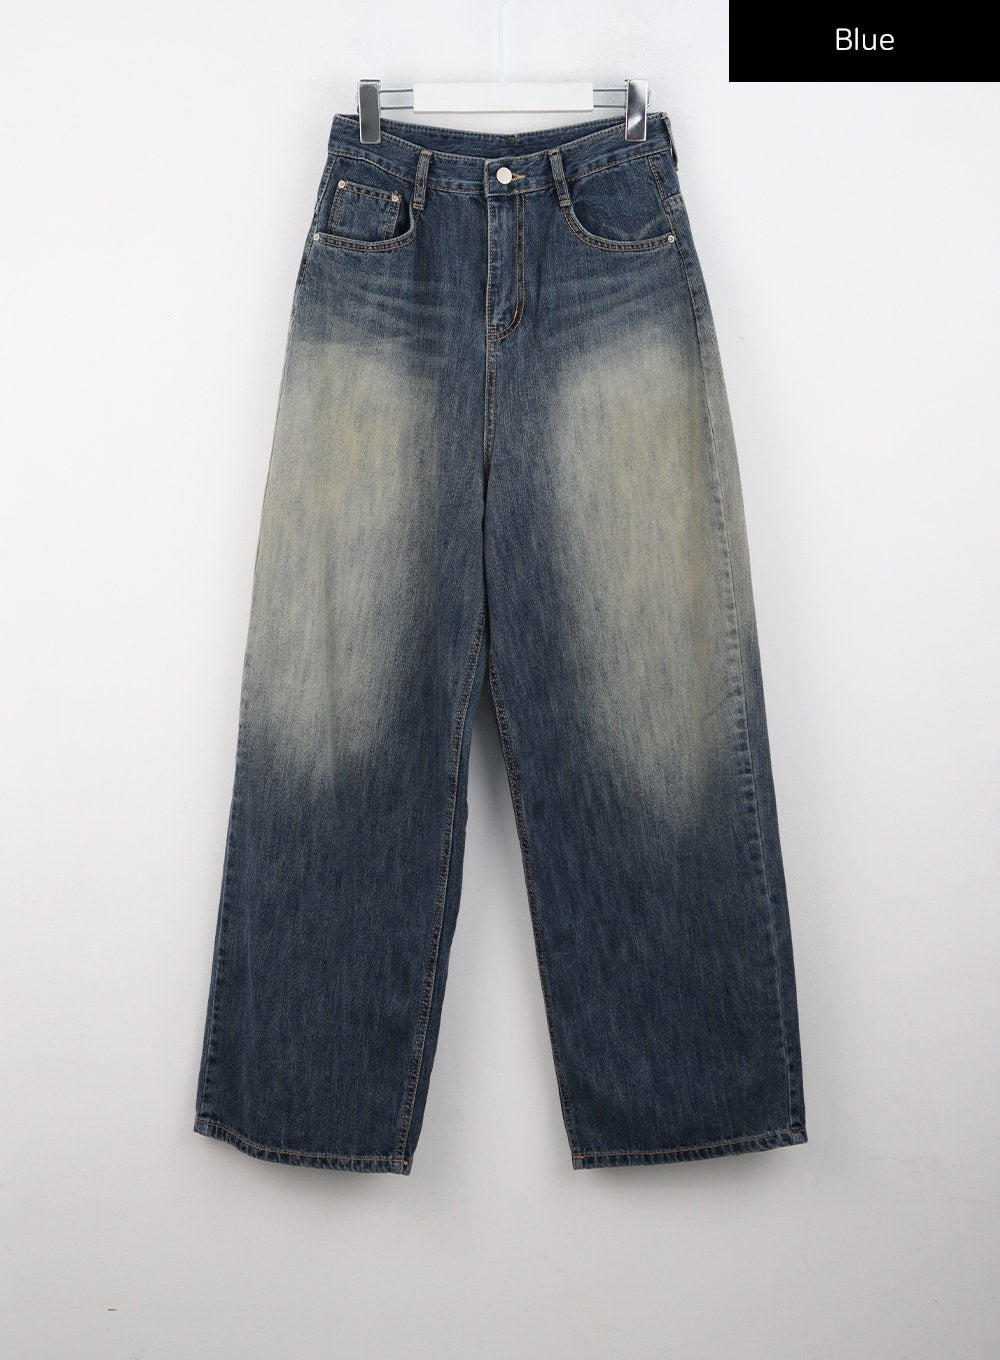 vintage-wash-wide-leg-jeans-co319